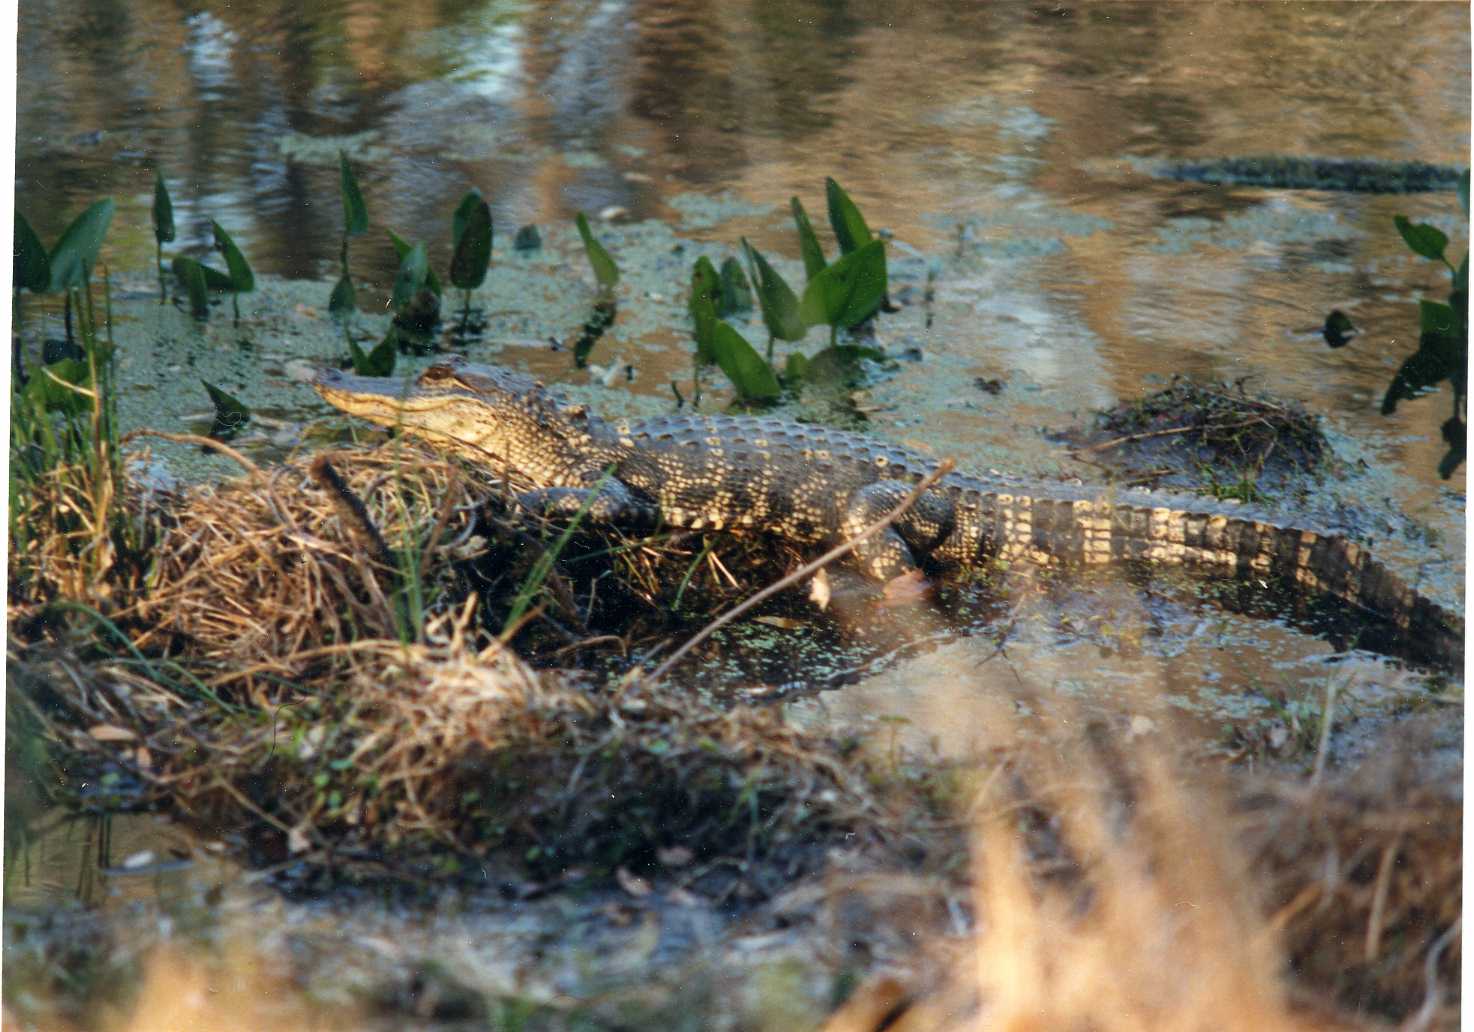 45-1 Alligator at Oatland.jpg